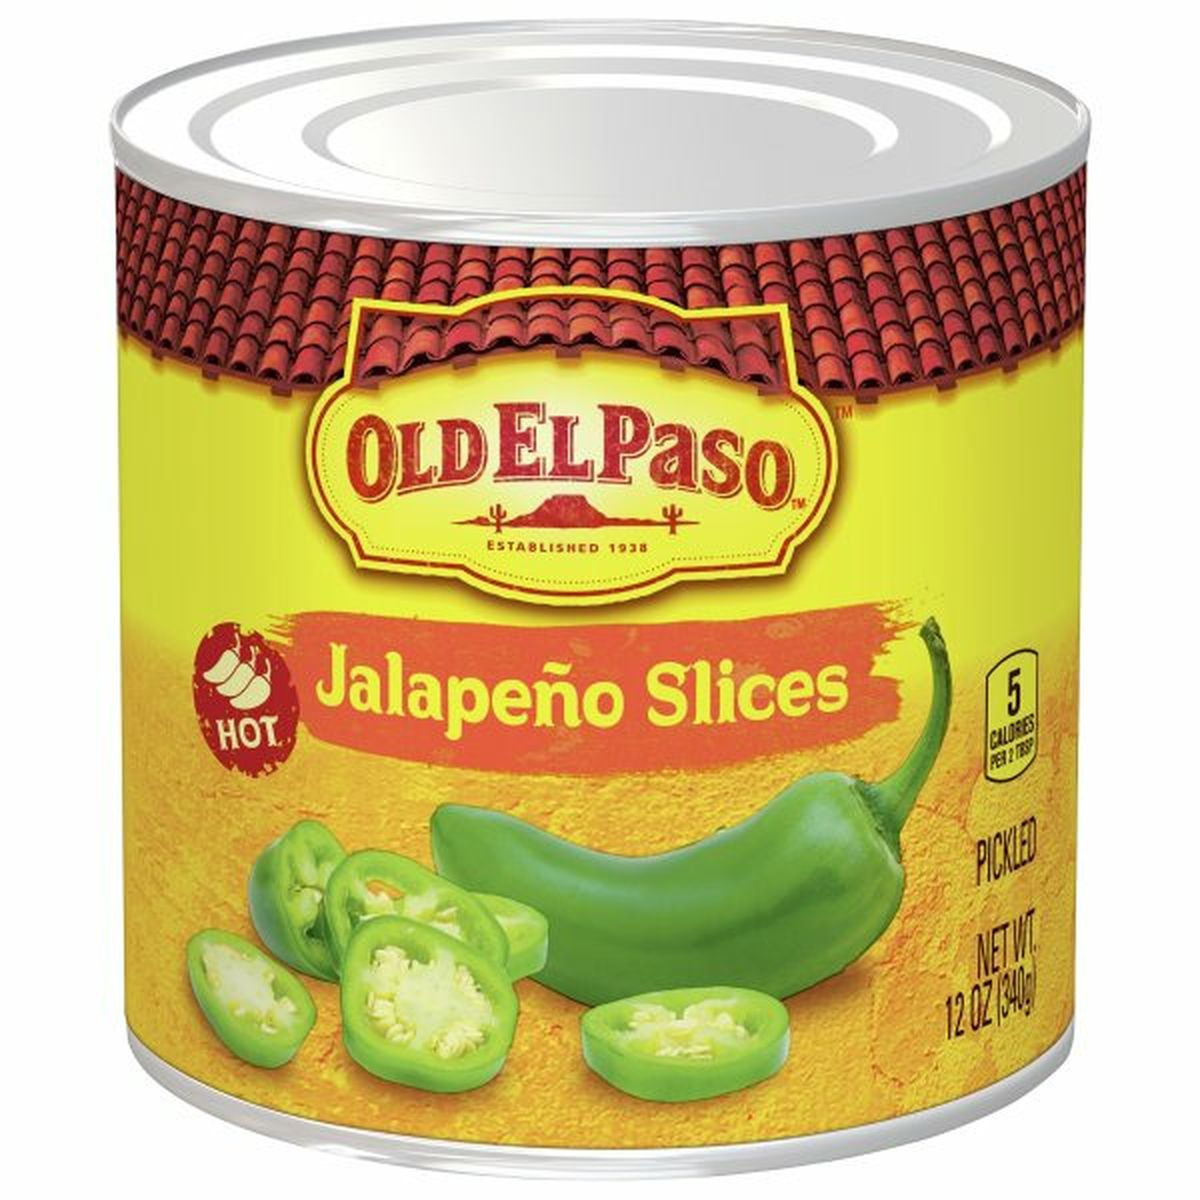 Calories in Old El Paso Jalapeno Slices, Hot